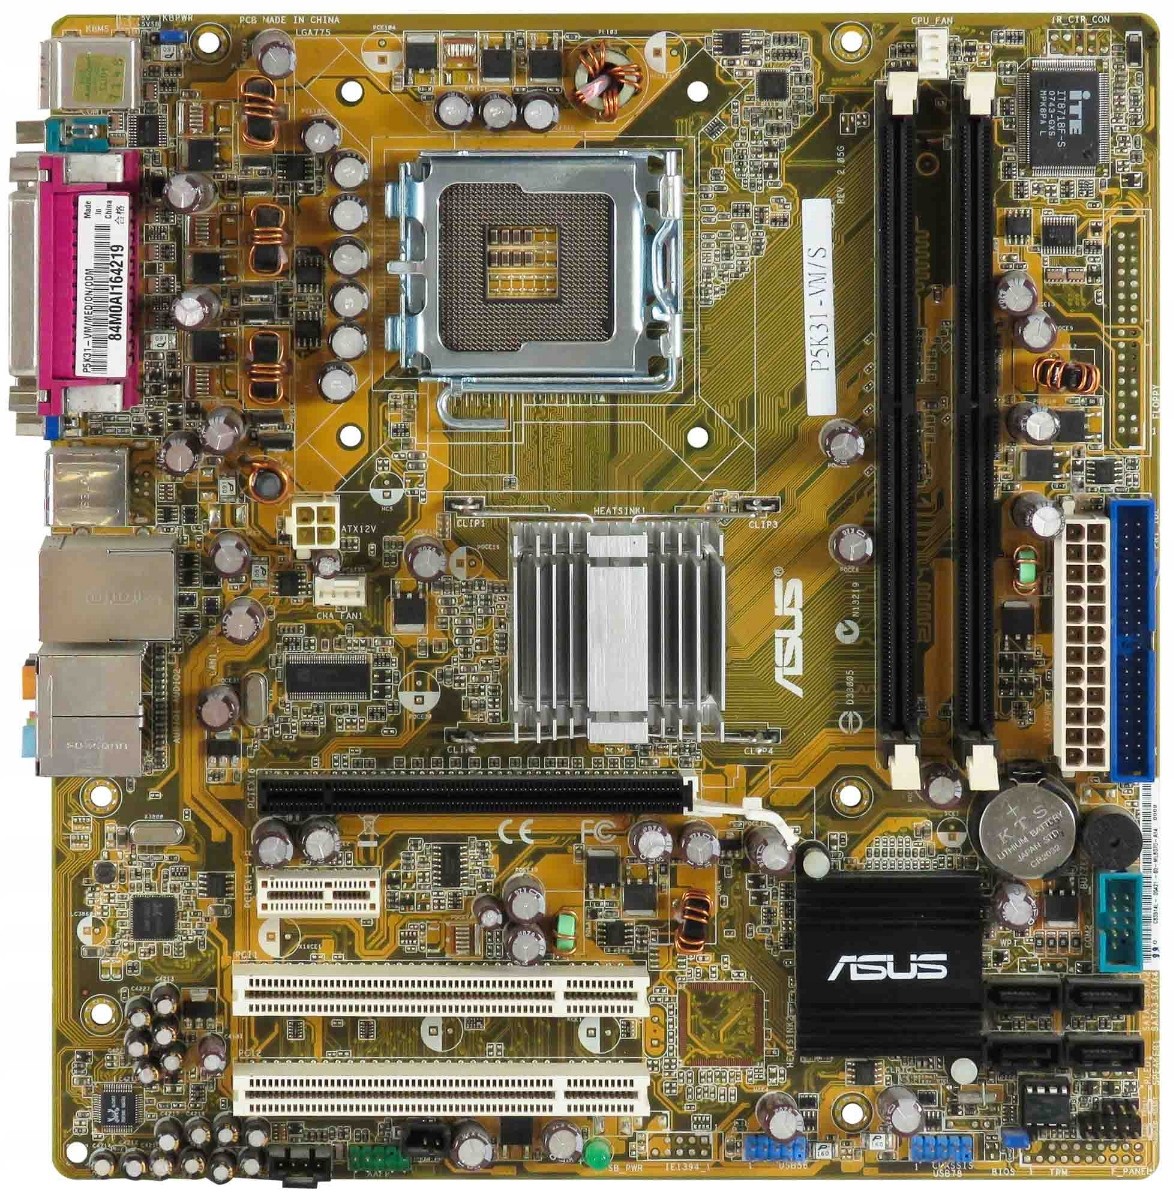 Asus P5K31-VM/S LGA775 Intel G33 Express 2x DDR2